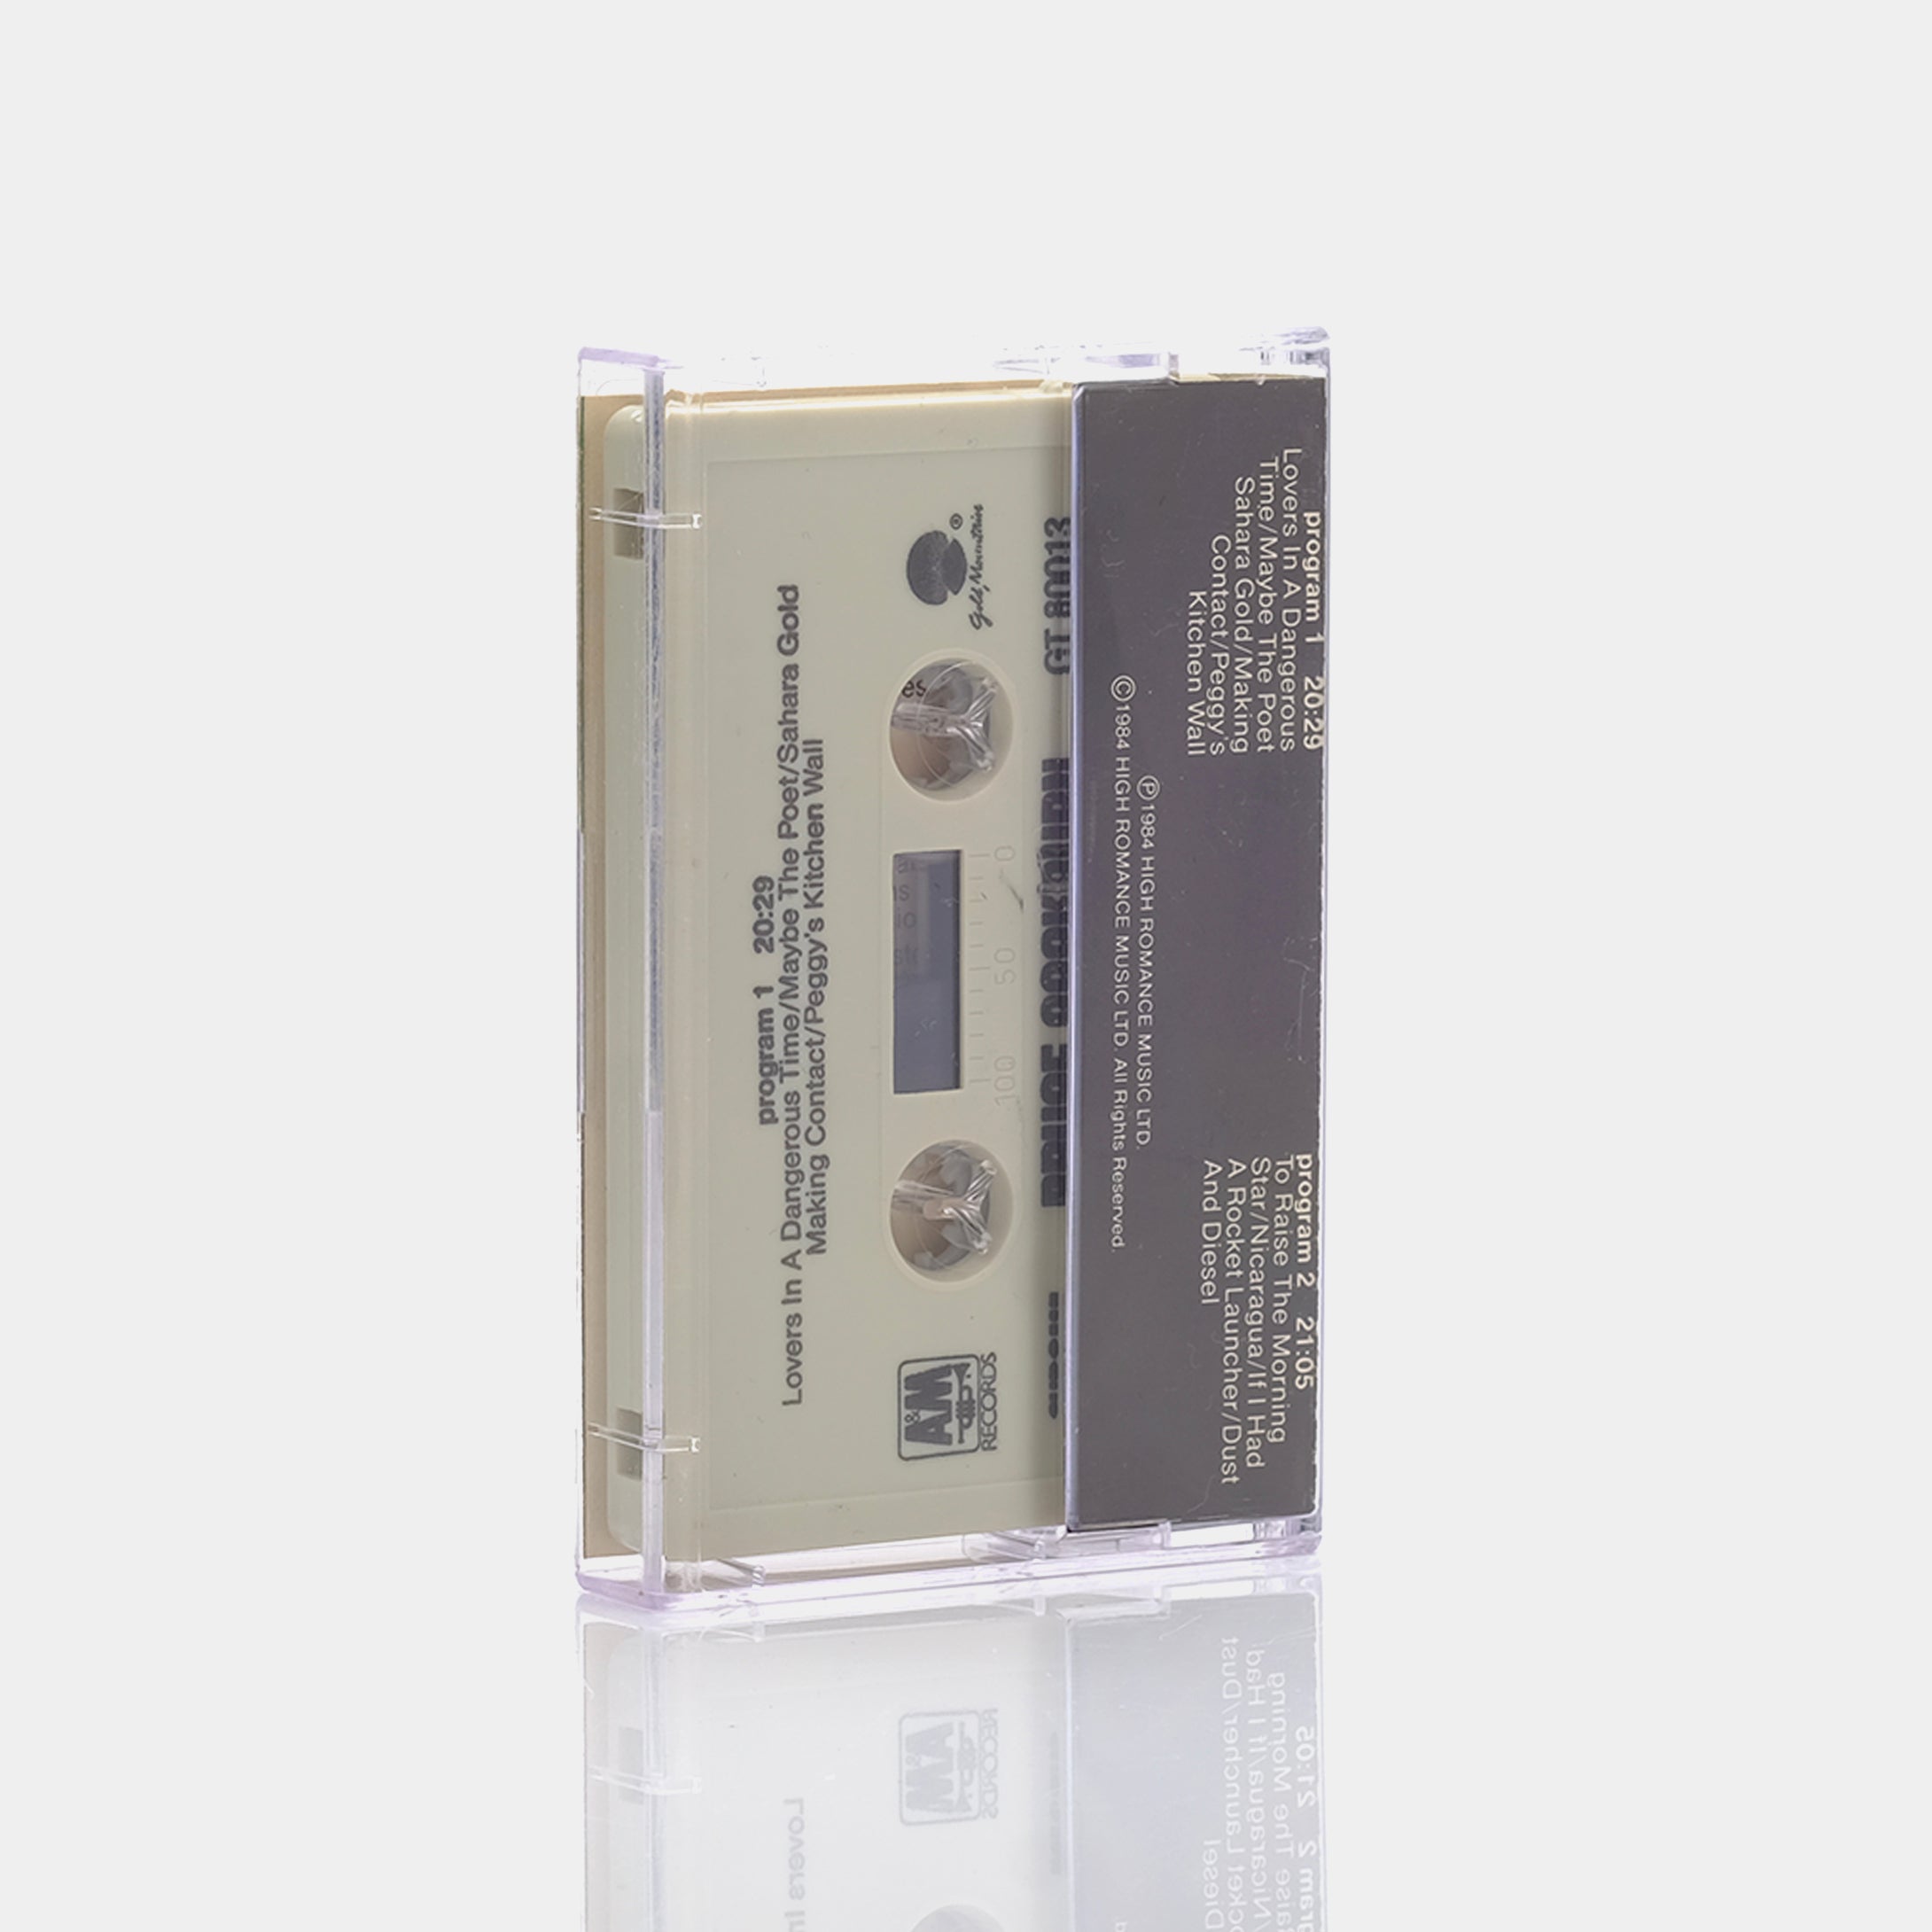 Bruce Cockburn  - Stealing Fire Cassette Tape